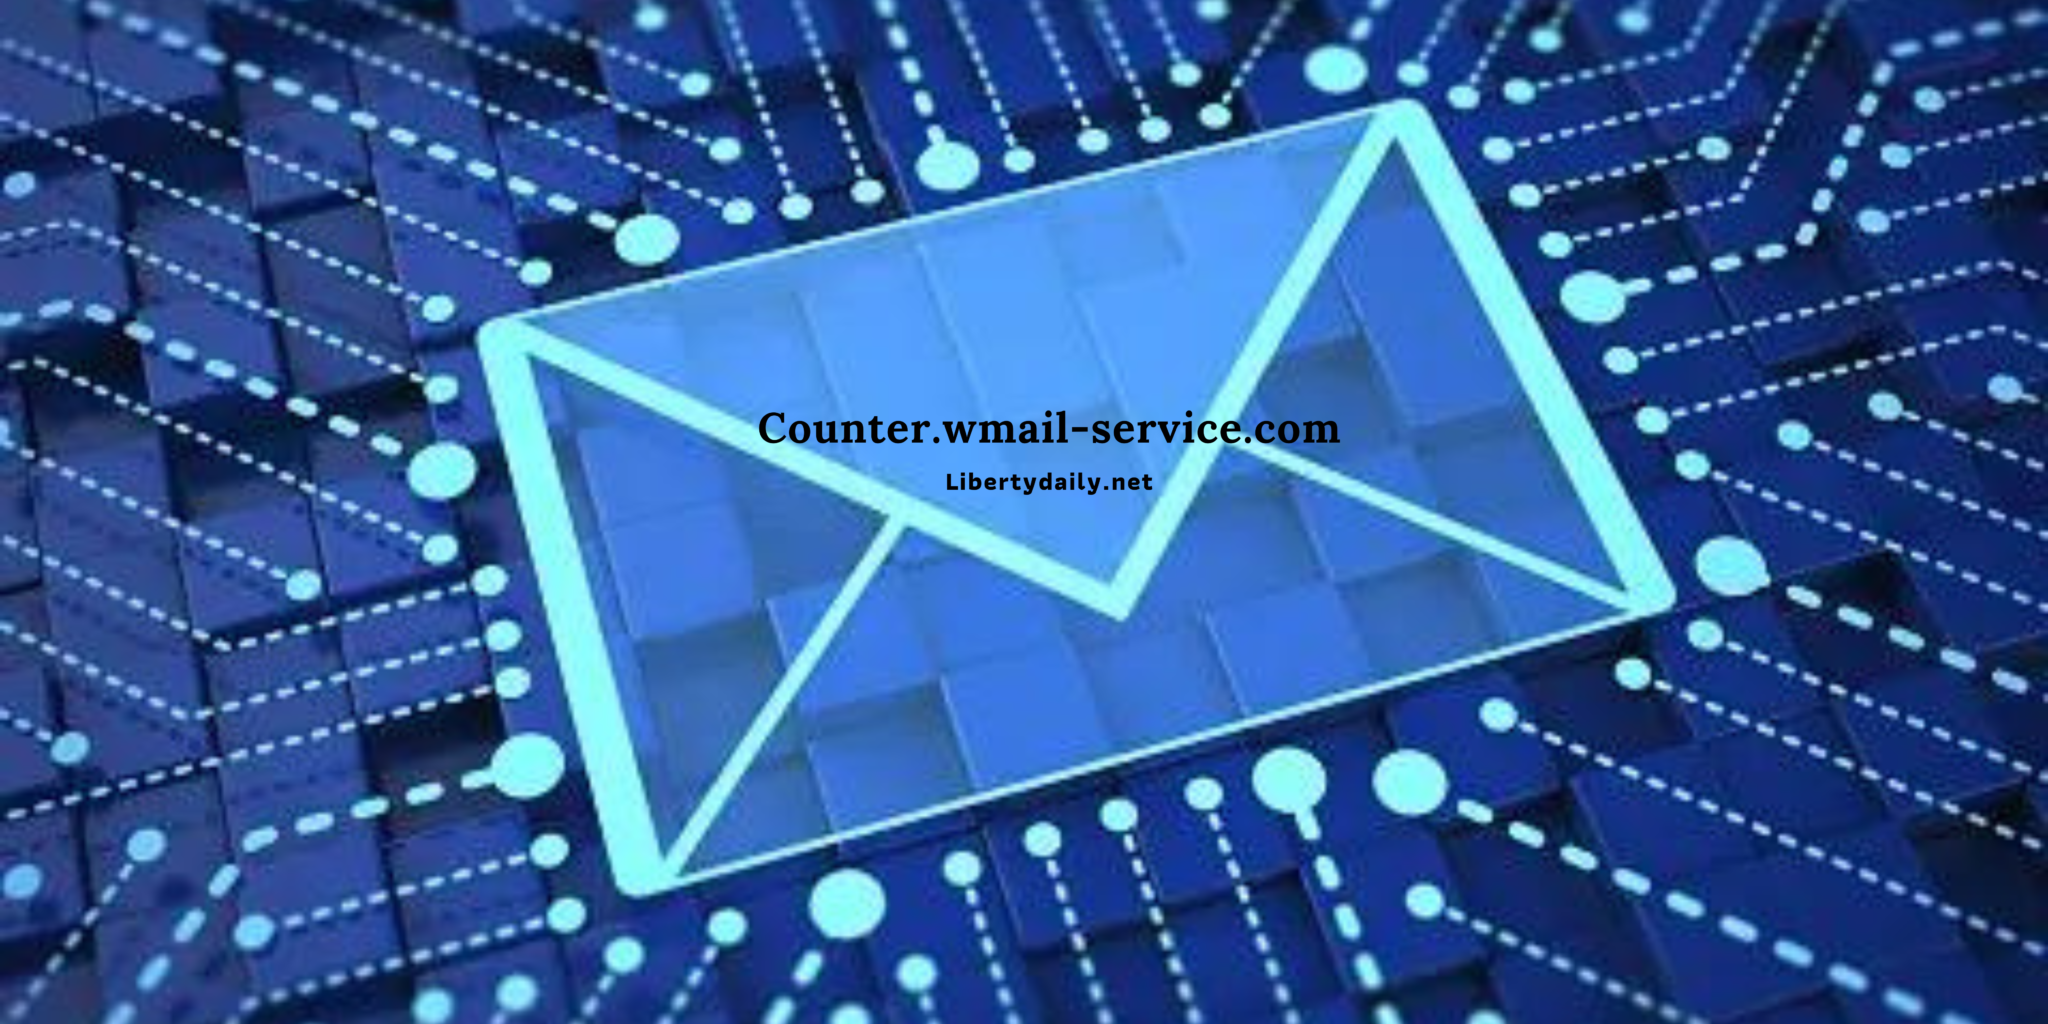 Counter.wmail-service.com